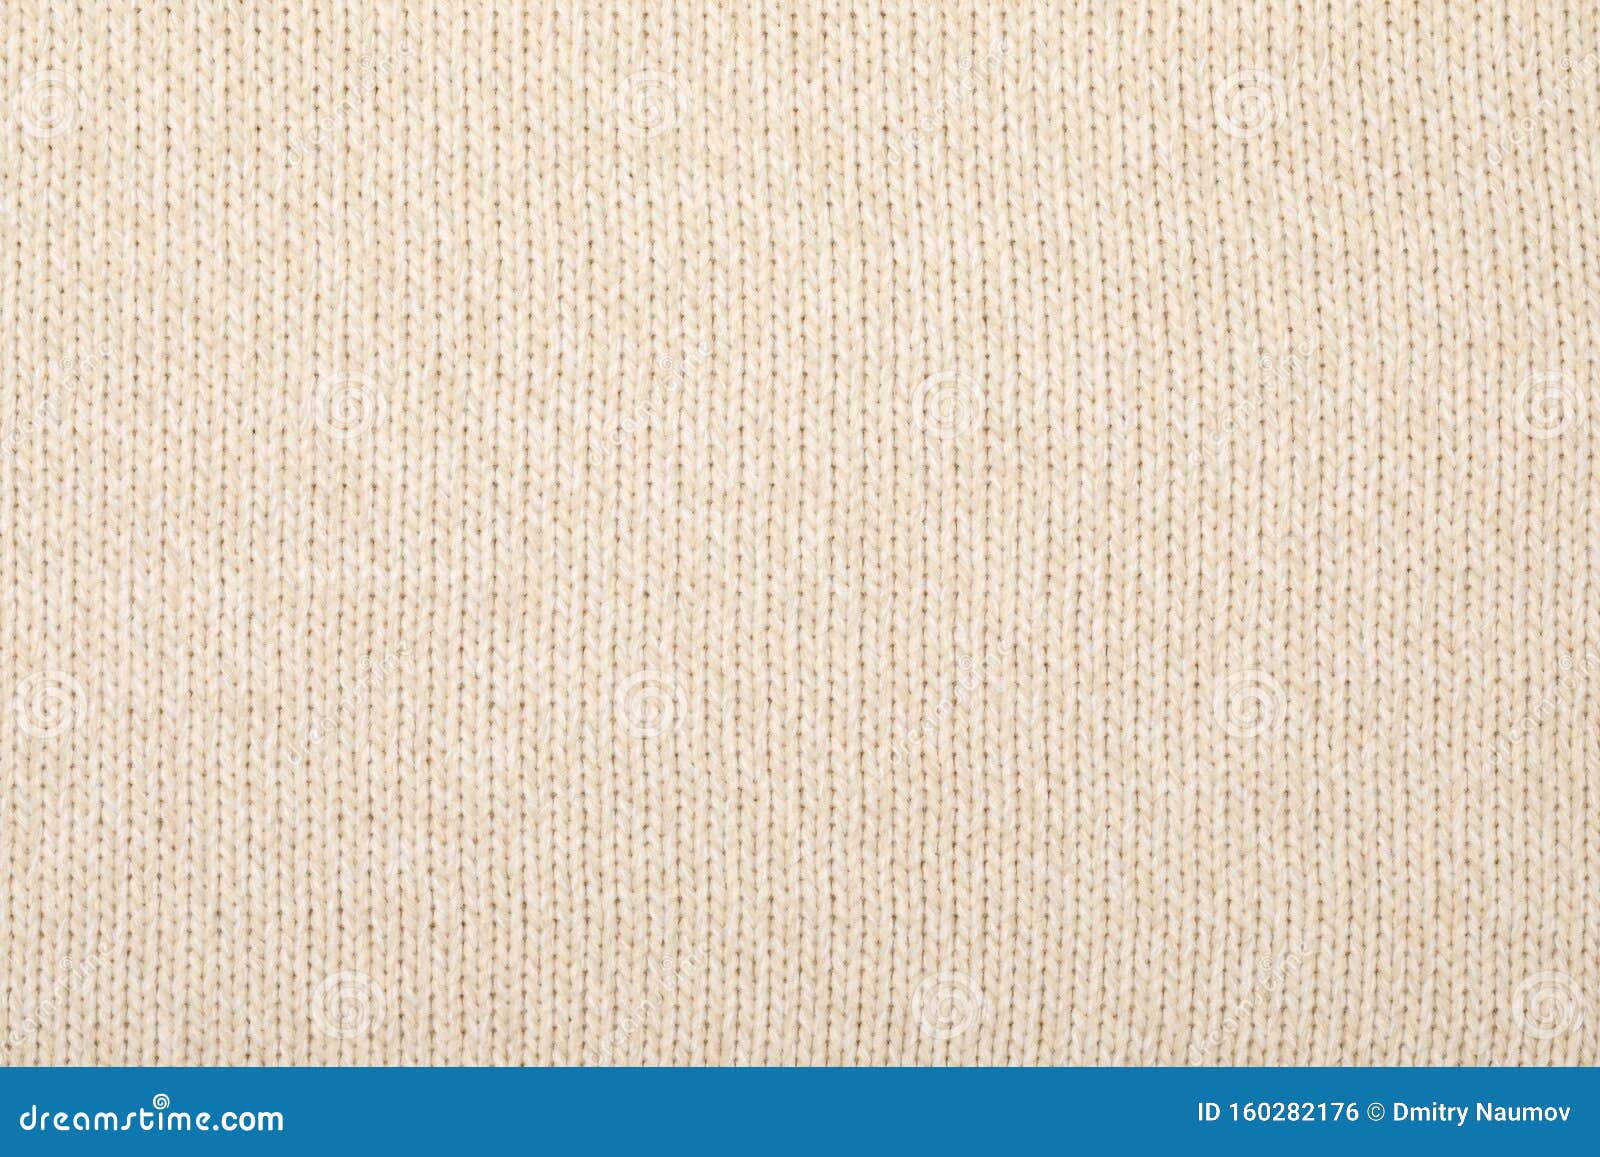 Beige Melange Knitting Fabric Textured Background Stock Photo - Image of  sample, repeat: 160282176